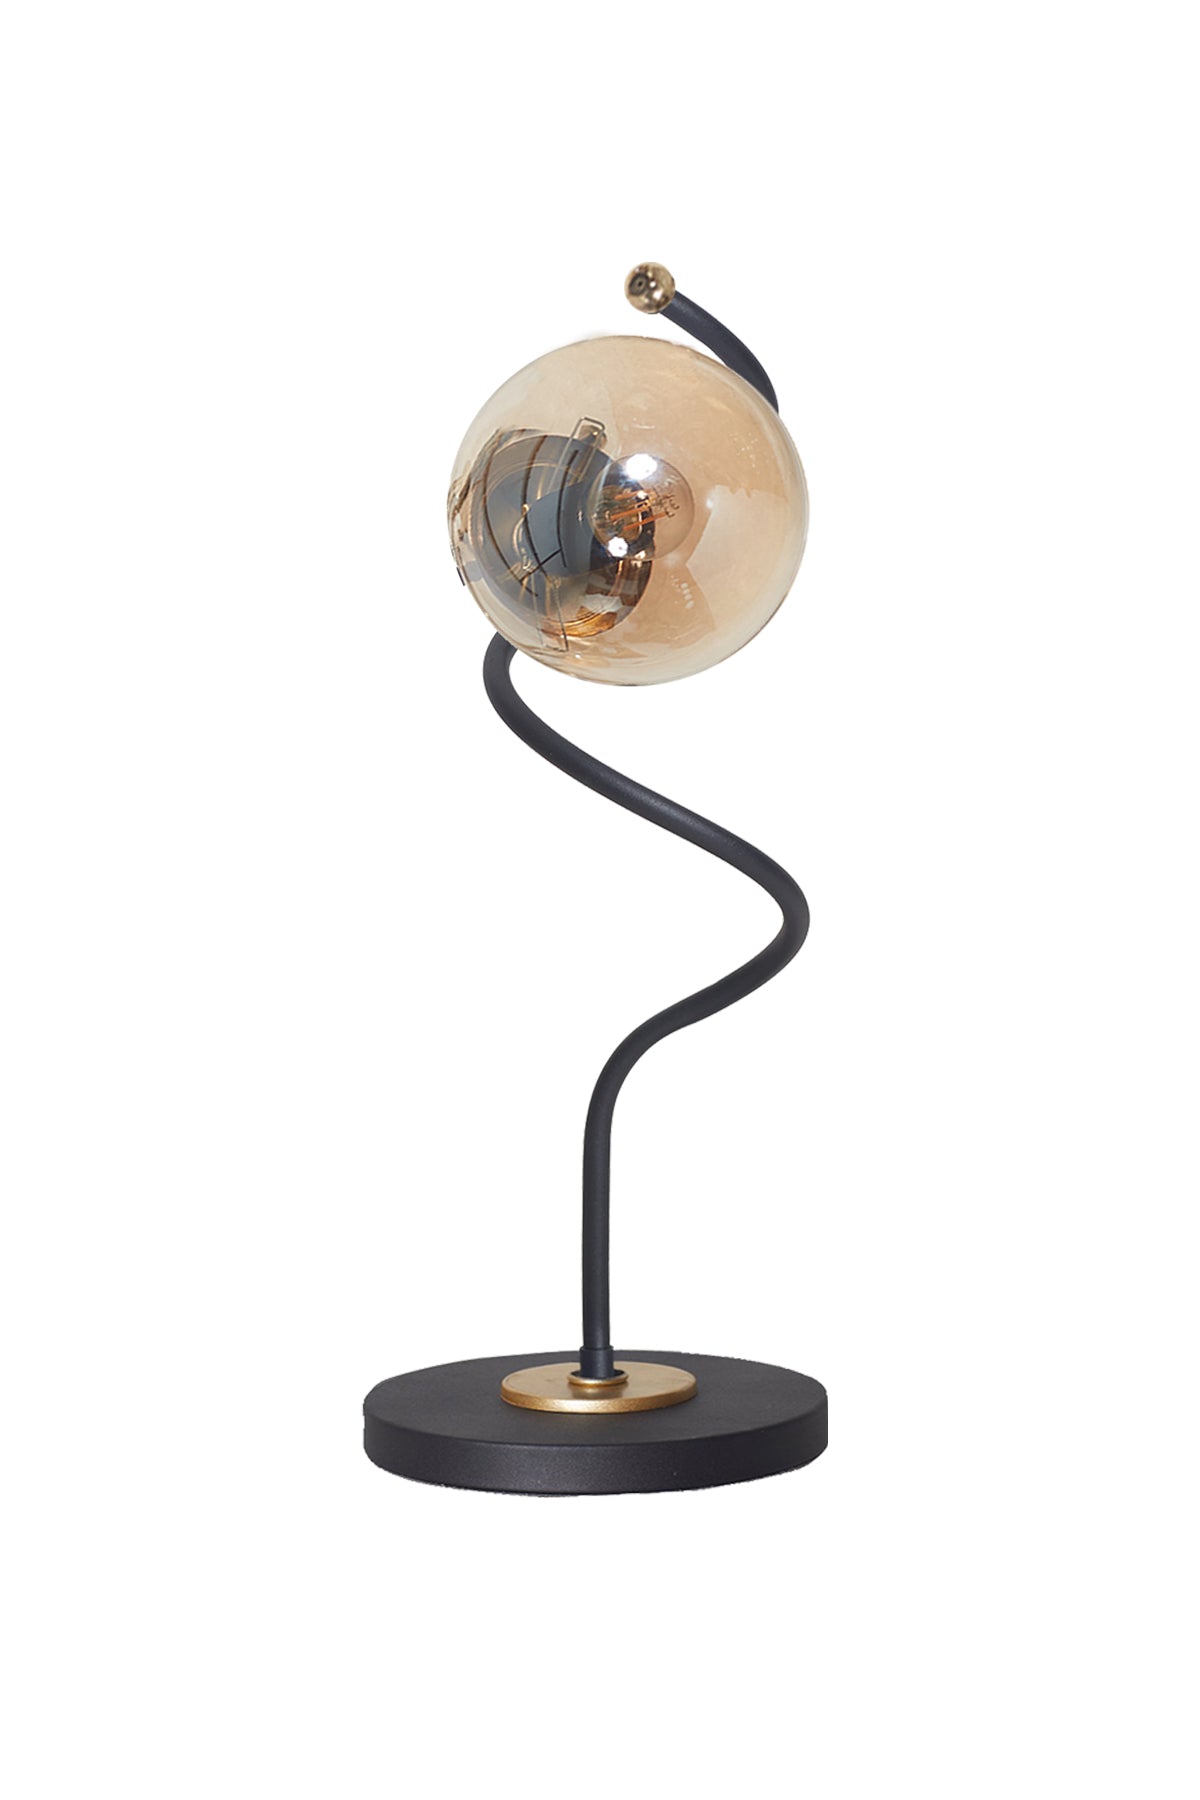 Luzarana Nora black chrome luxury desk lamp curved modern design table lamp